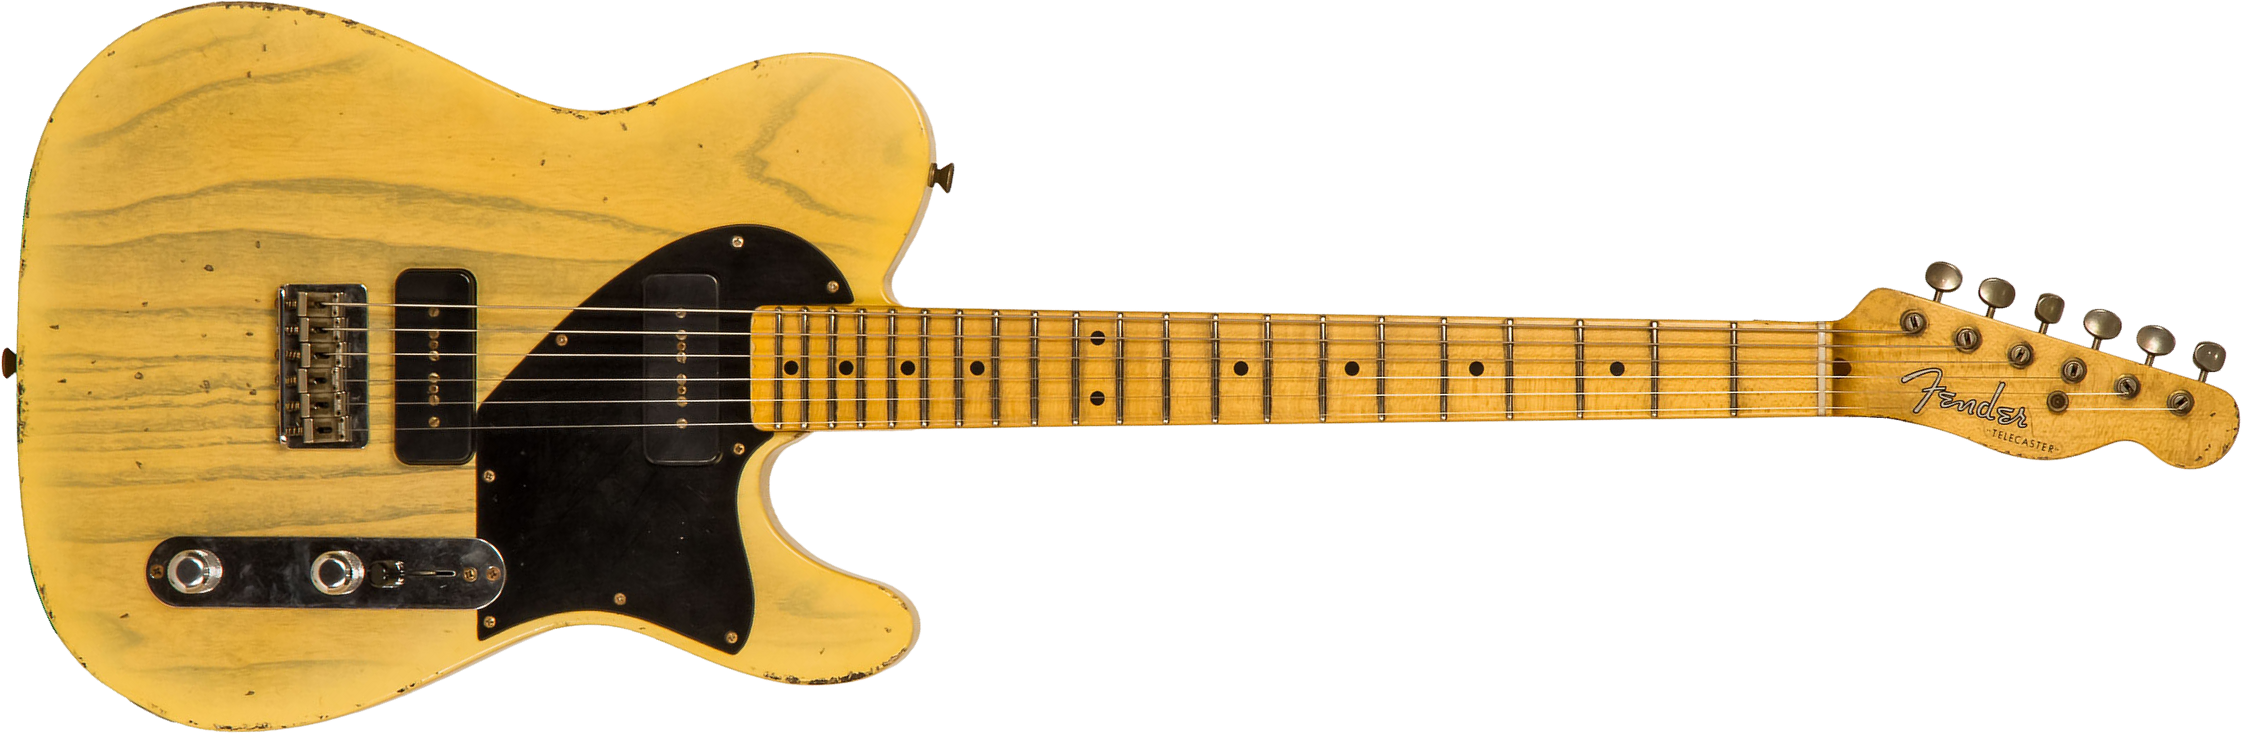 Fender Custom Shop Tele 1950 Masterbuilt J.smith Mn #r111000 - Relic Nocaster Blonde - Tel shape electric guitar - Main picture